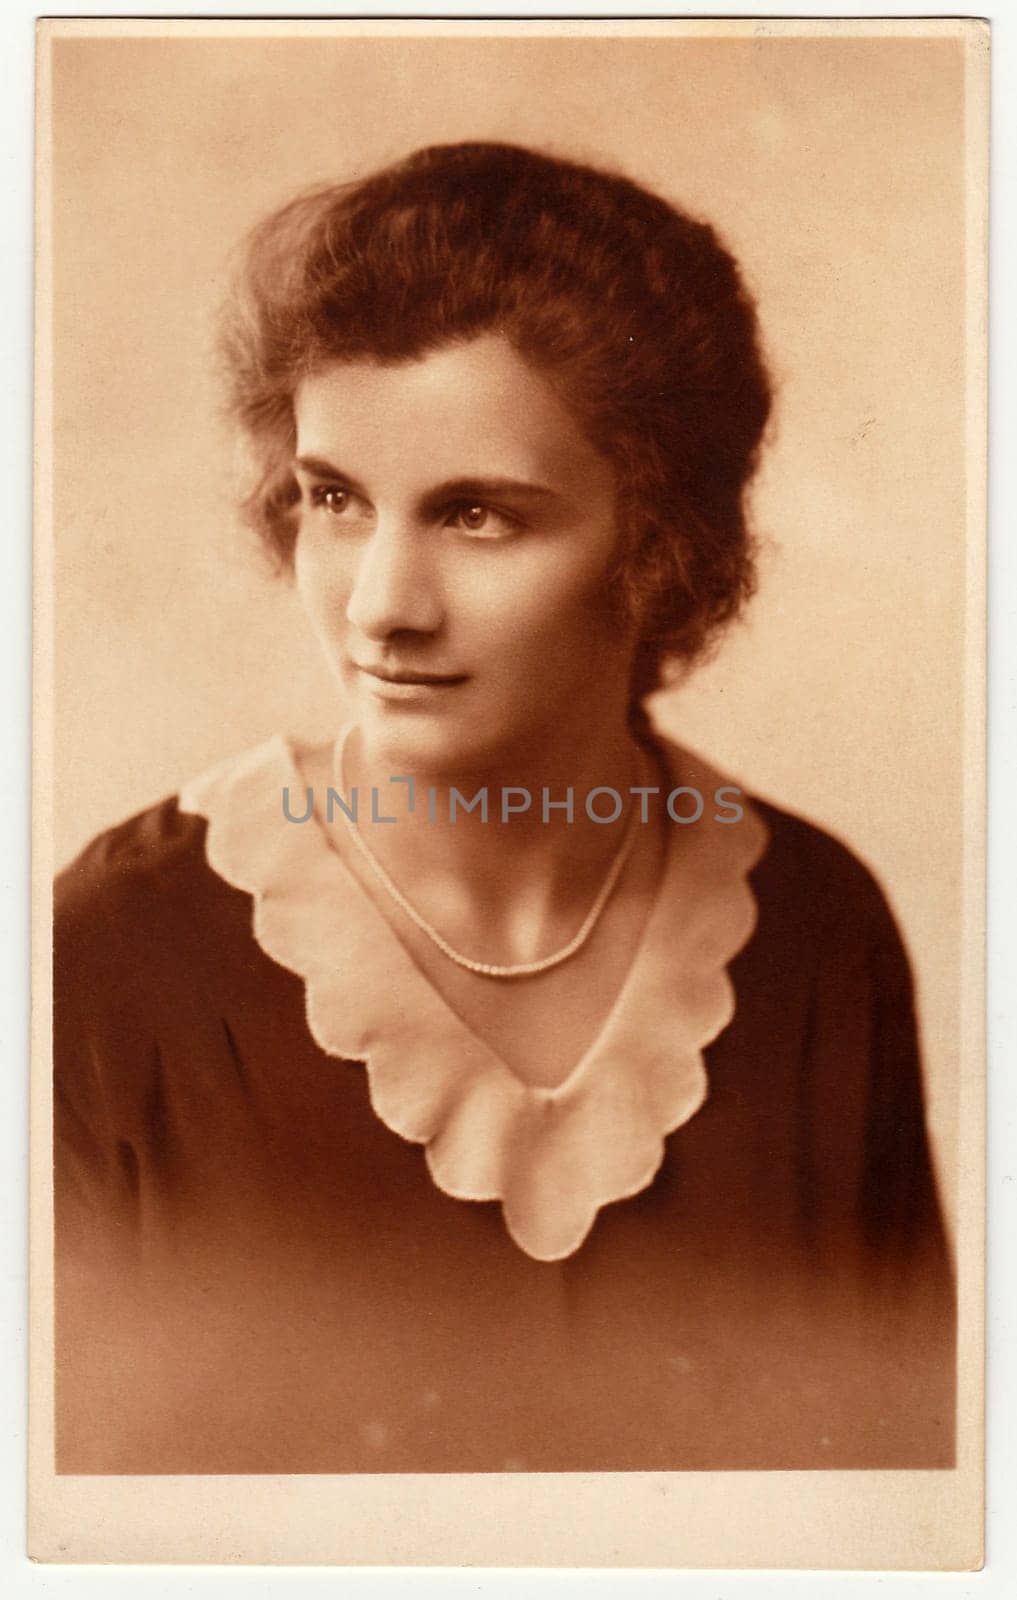 THE CZECHOSLOVAK SOCIALIST REPUBLIC - CIRCA 1930s: Vintage photo shows woman. Photo has sepia tint.